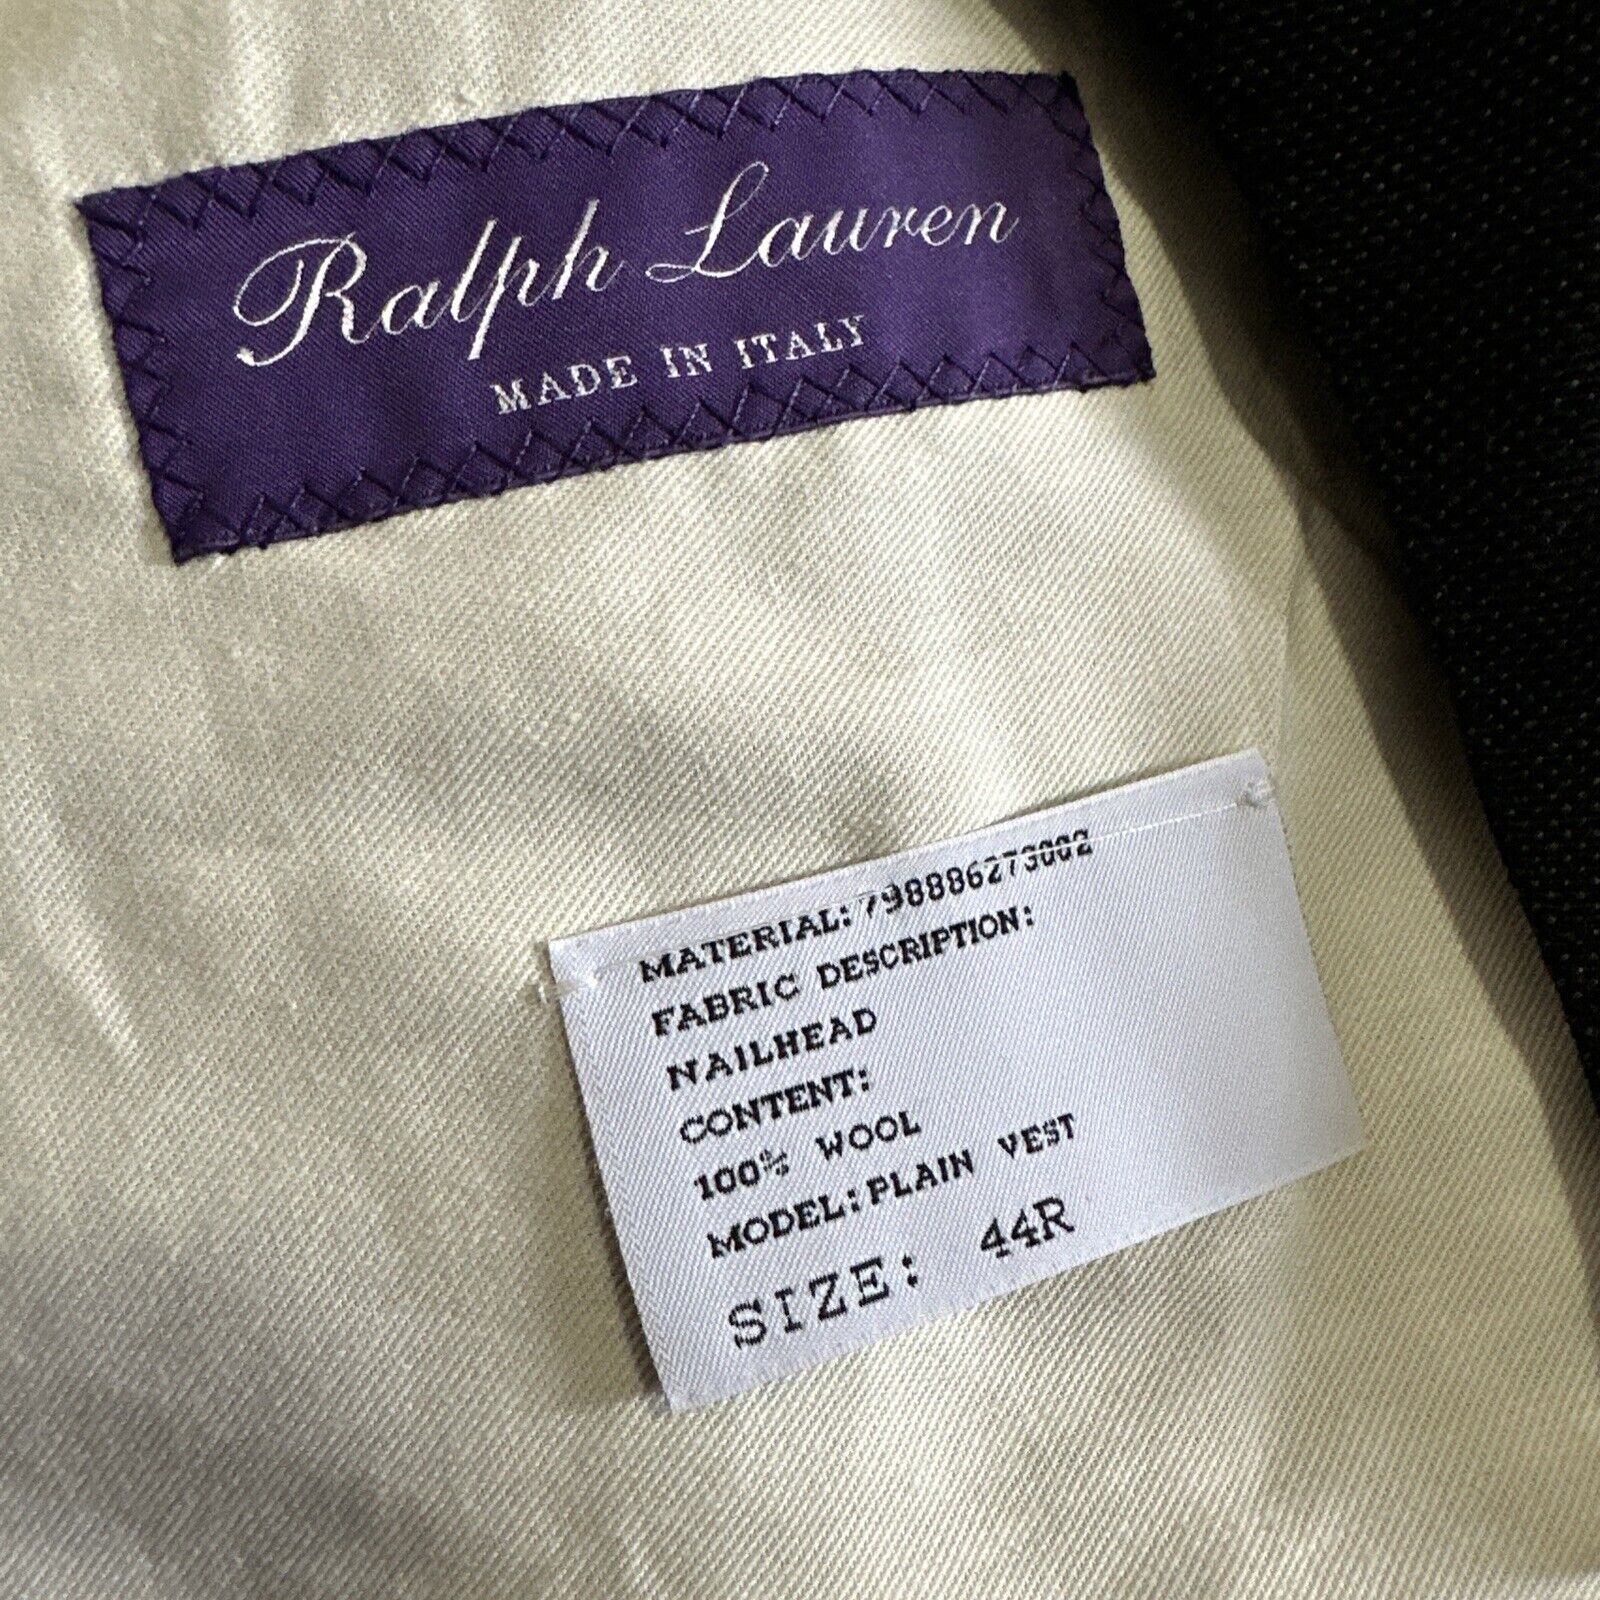 Neu $995 Ralph Lauren Purple Label Herrenweste DK Grau 44R US/54R Eu Italien